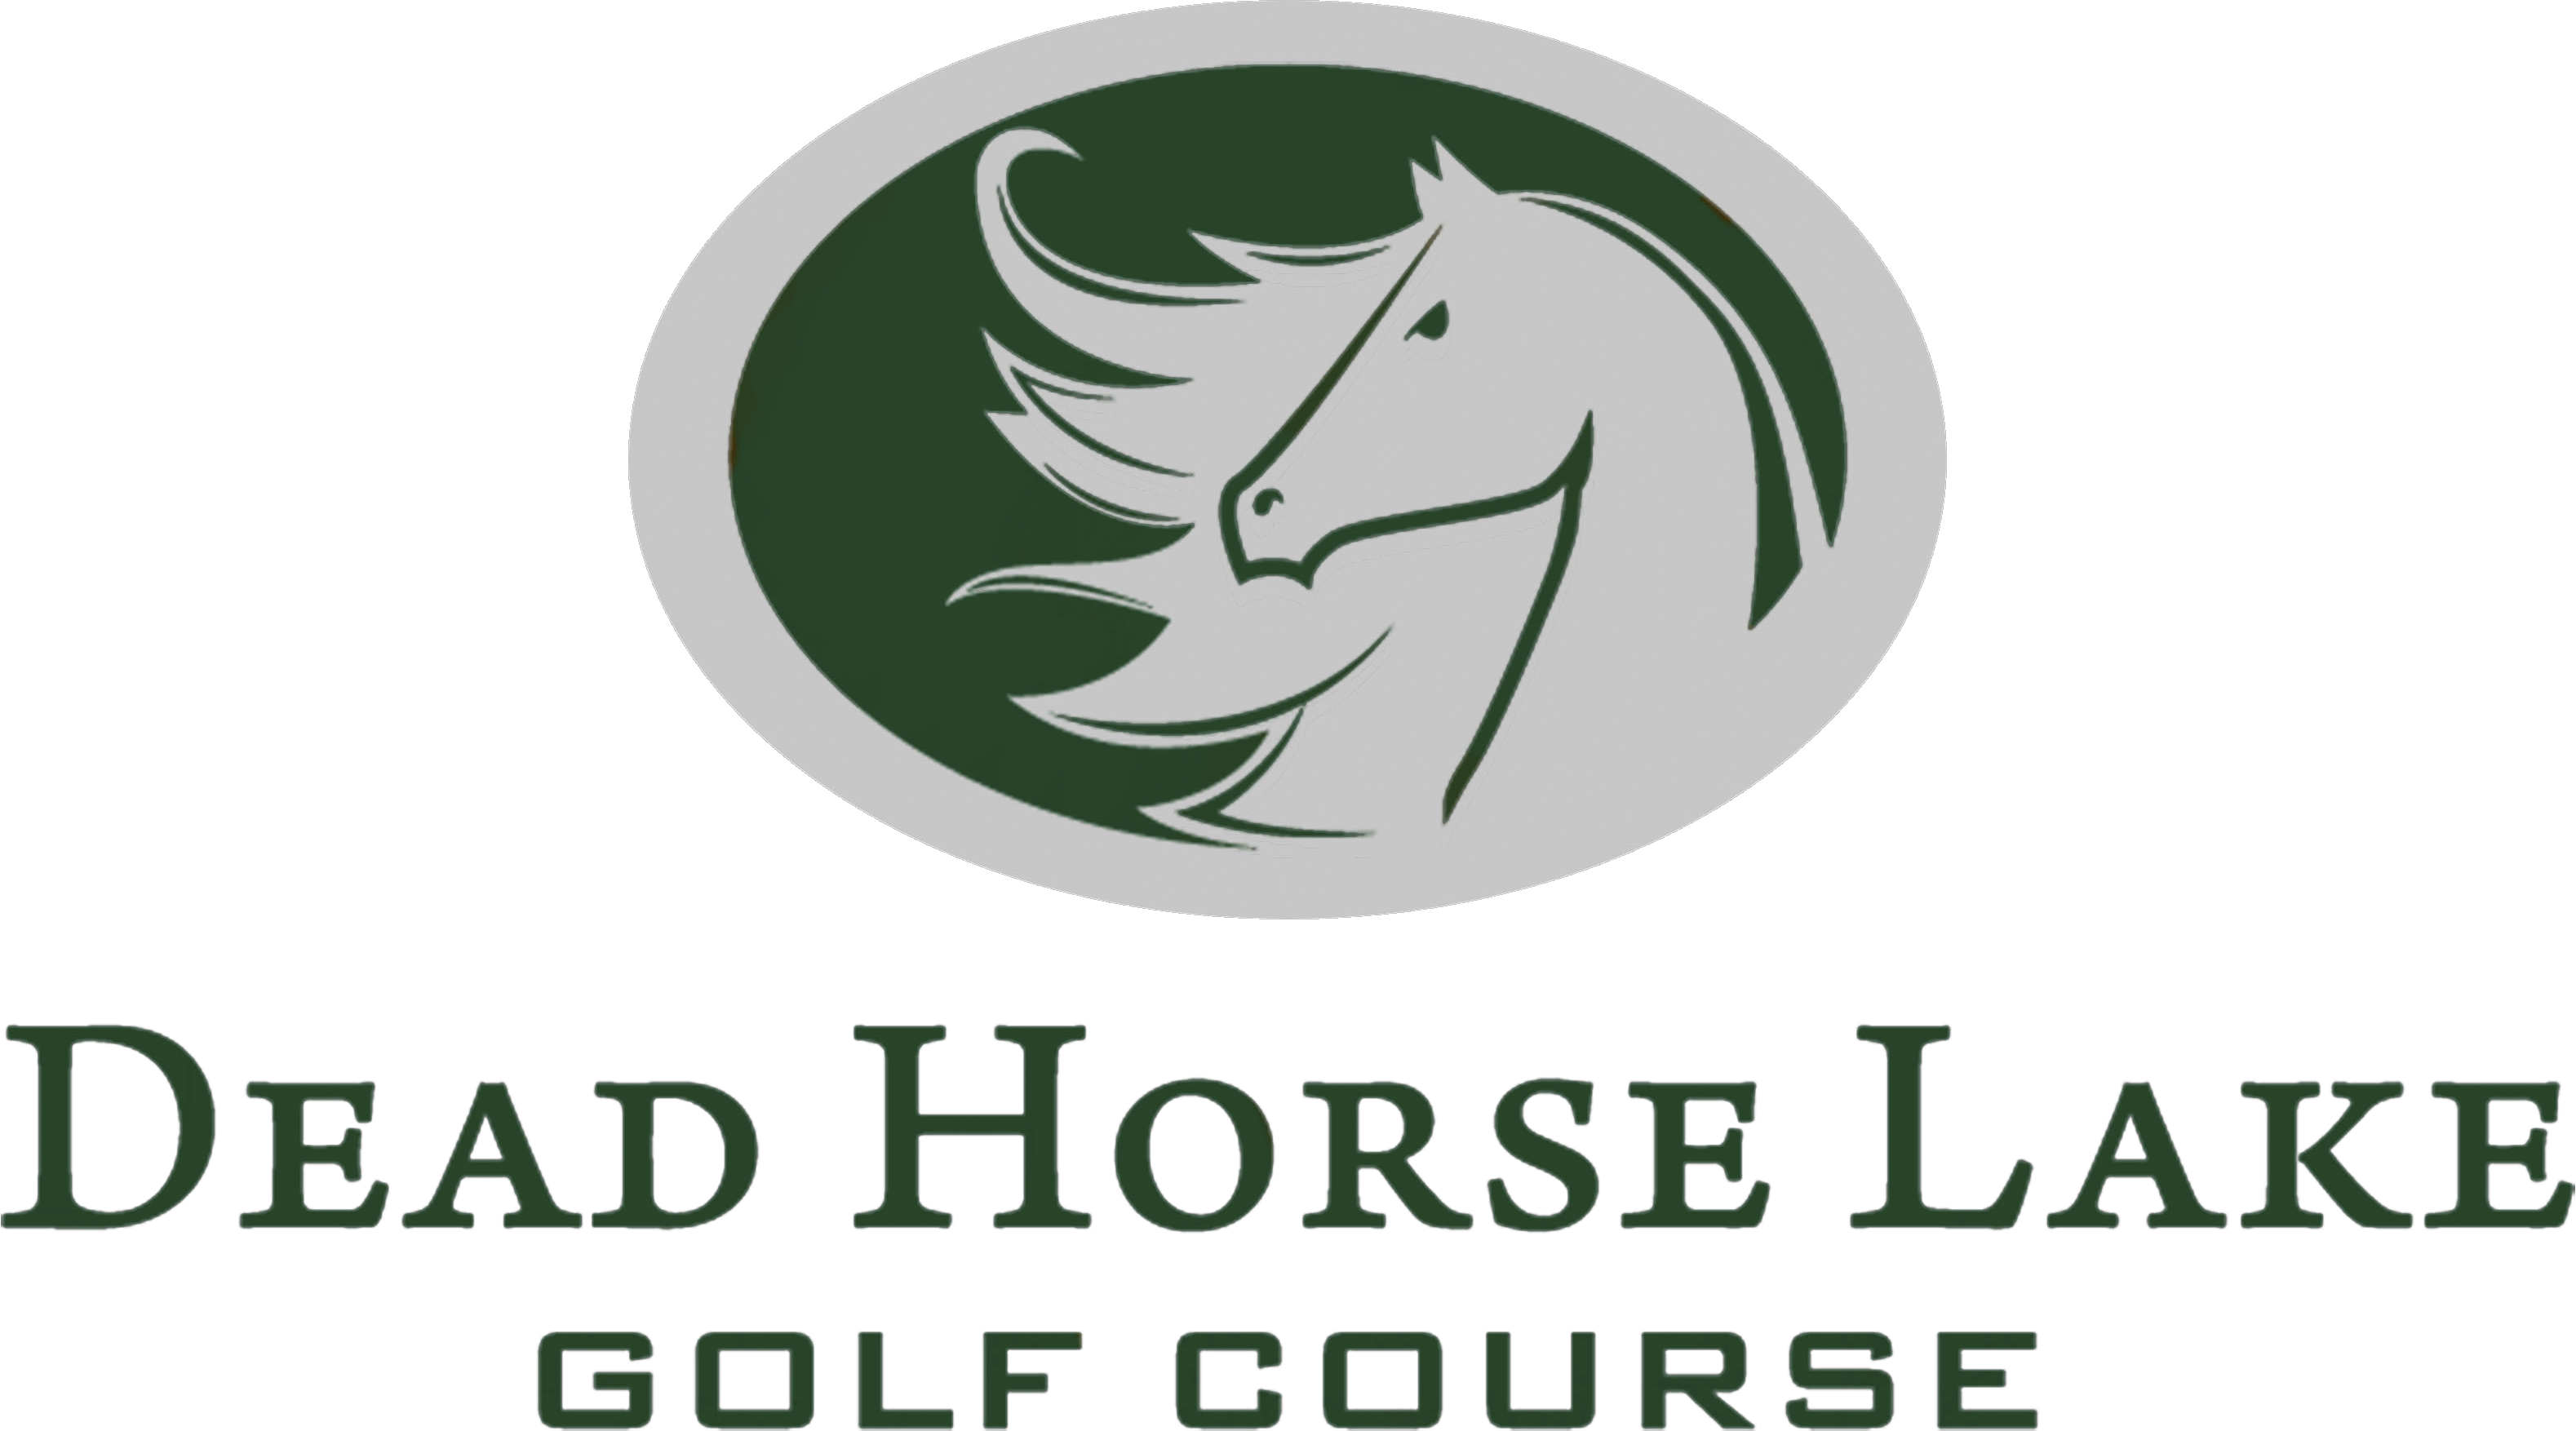 Dead Horse Lake Golf Course | Knoxville Public Golf Course | Driving Range